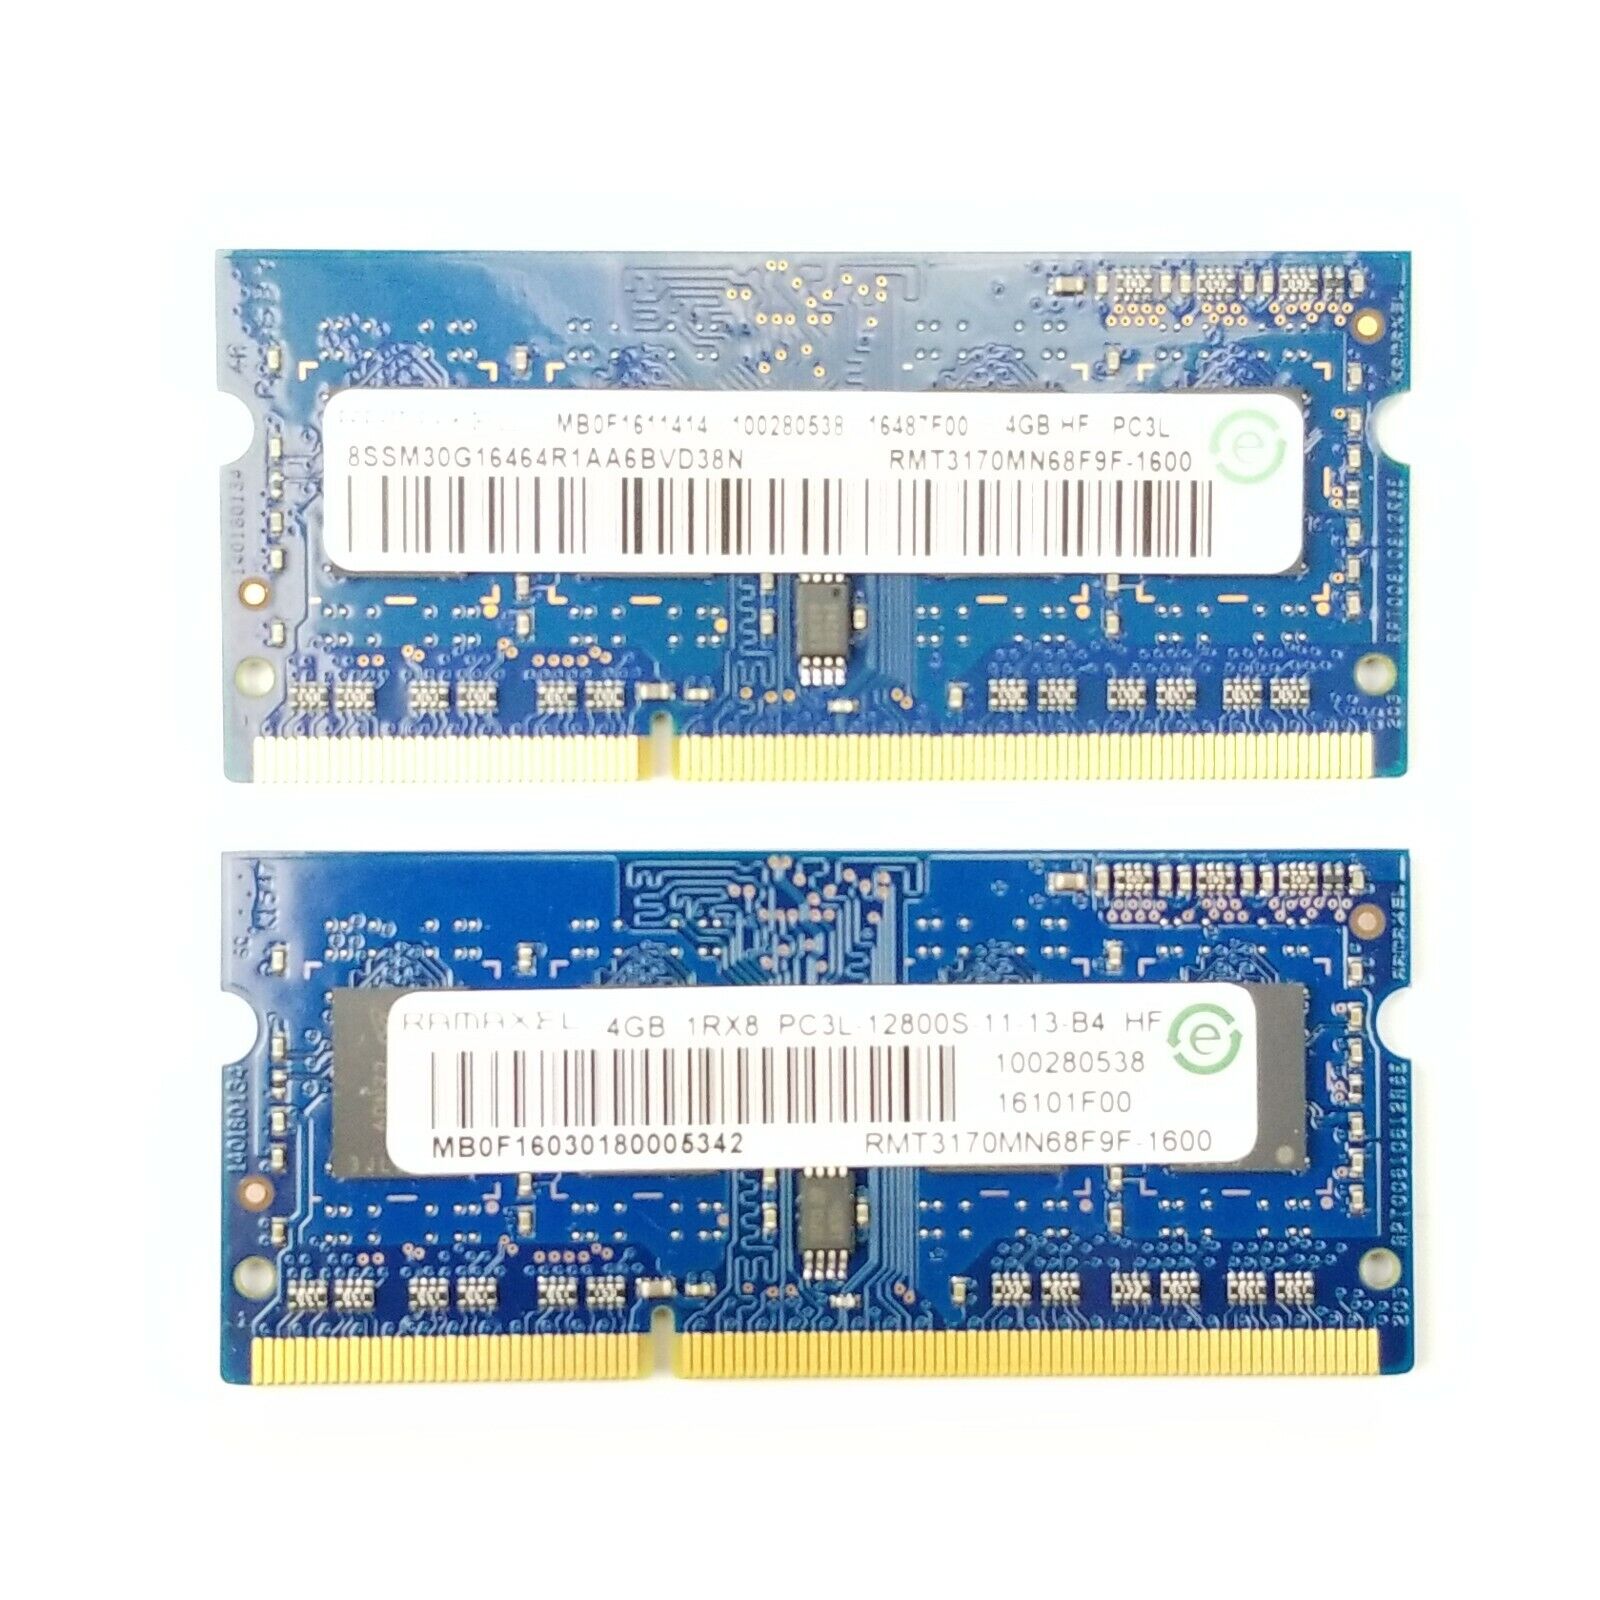 Ramaxel 8GB (2x4GB) PC3-12800S DDR3 SODIMM Laptop Memory RAM RMT3170MN68F9F-1600